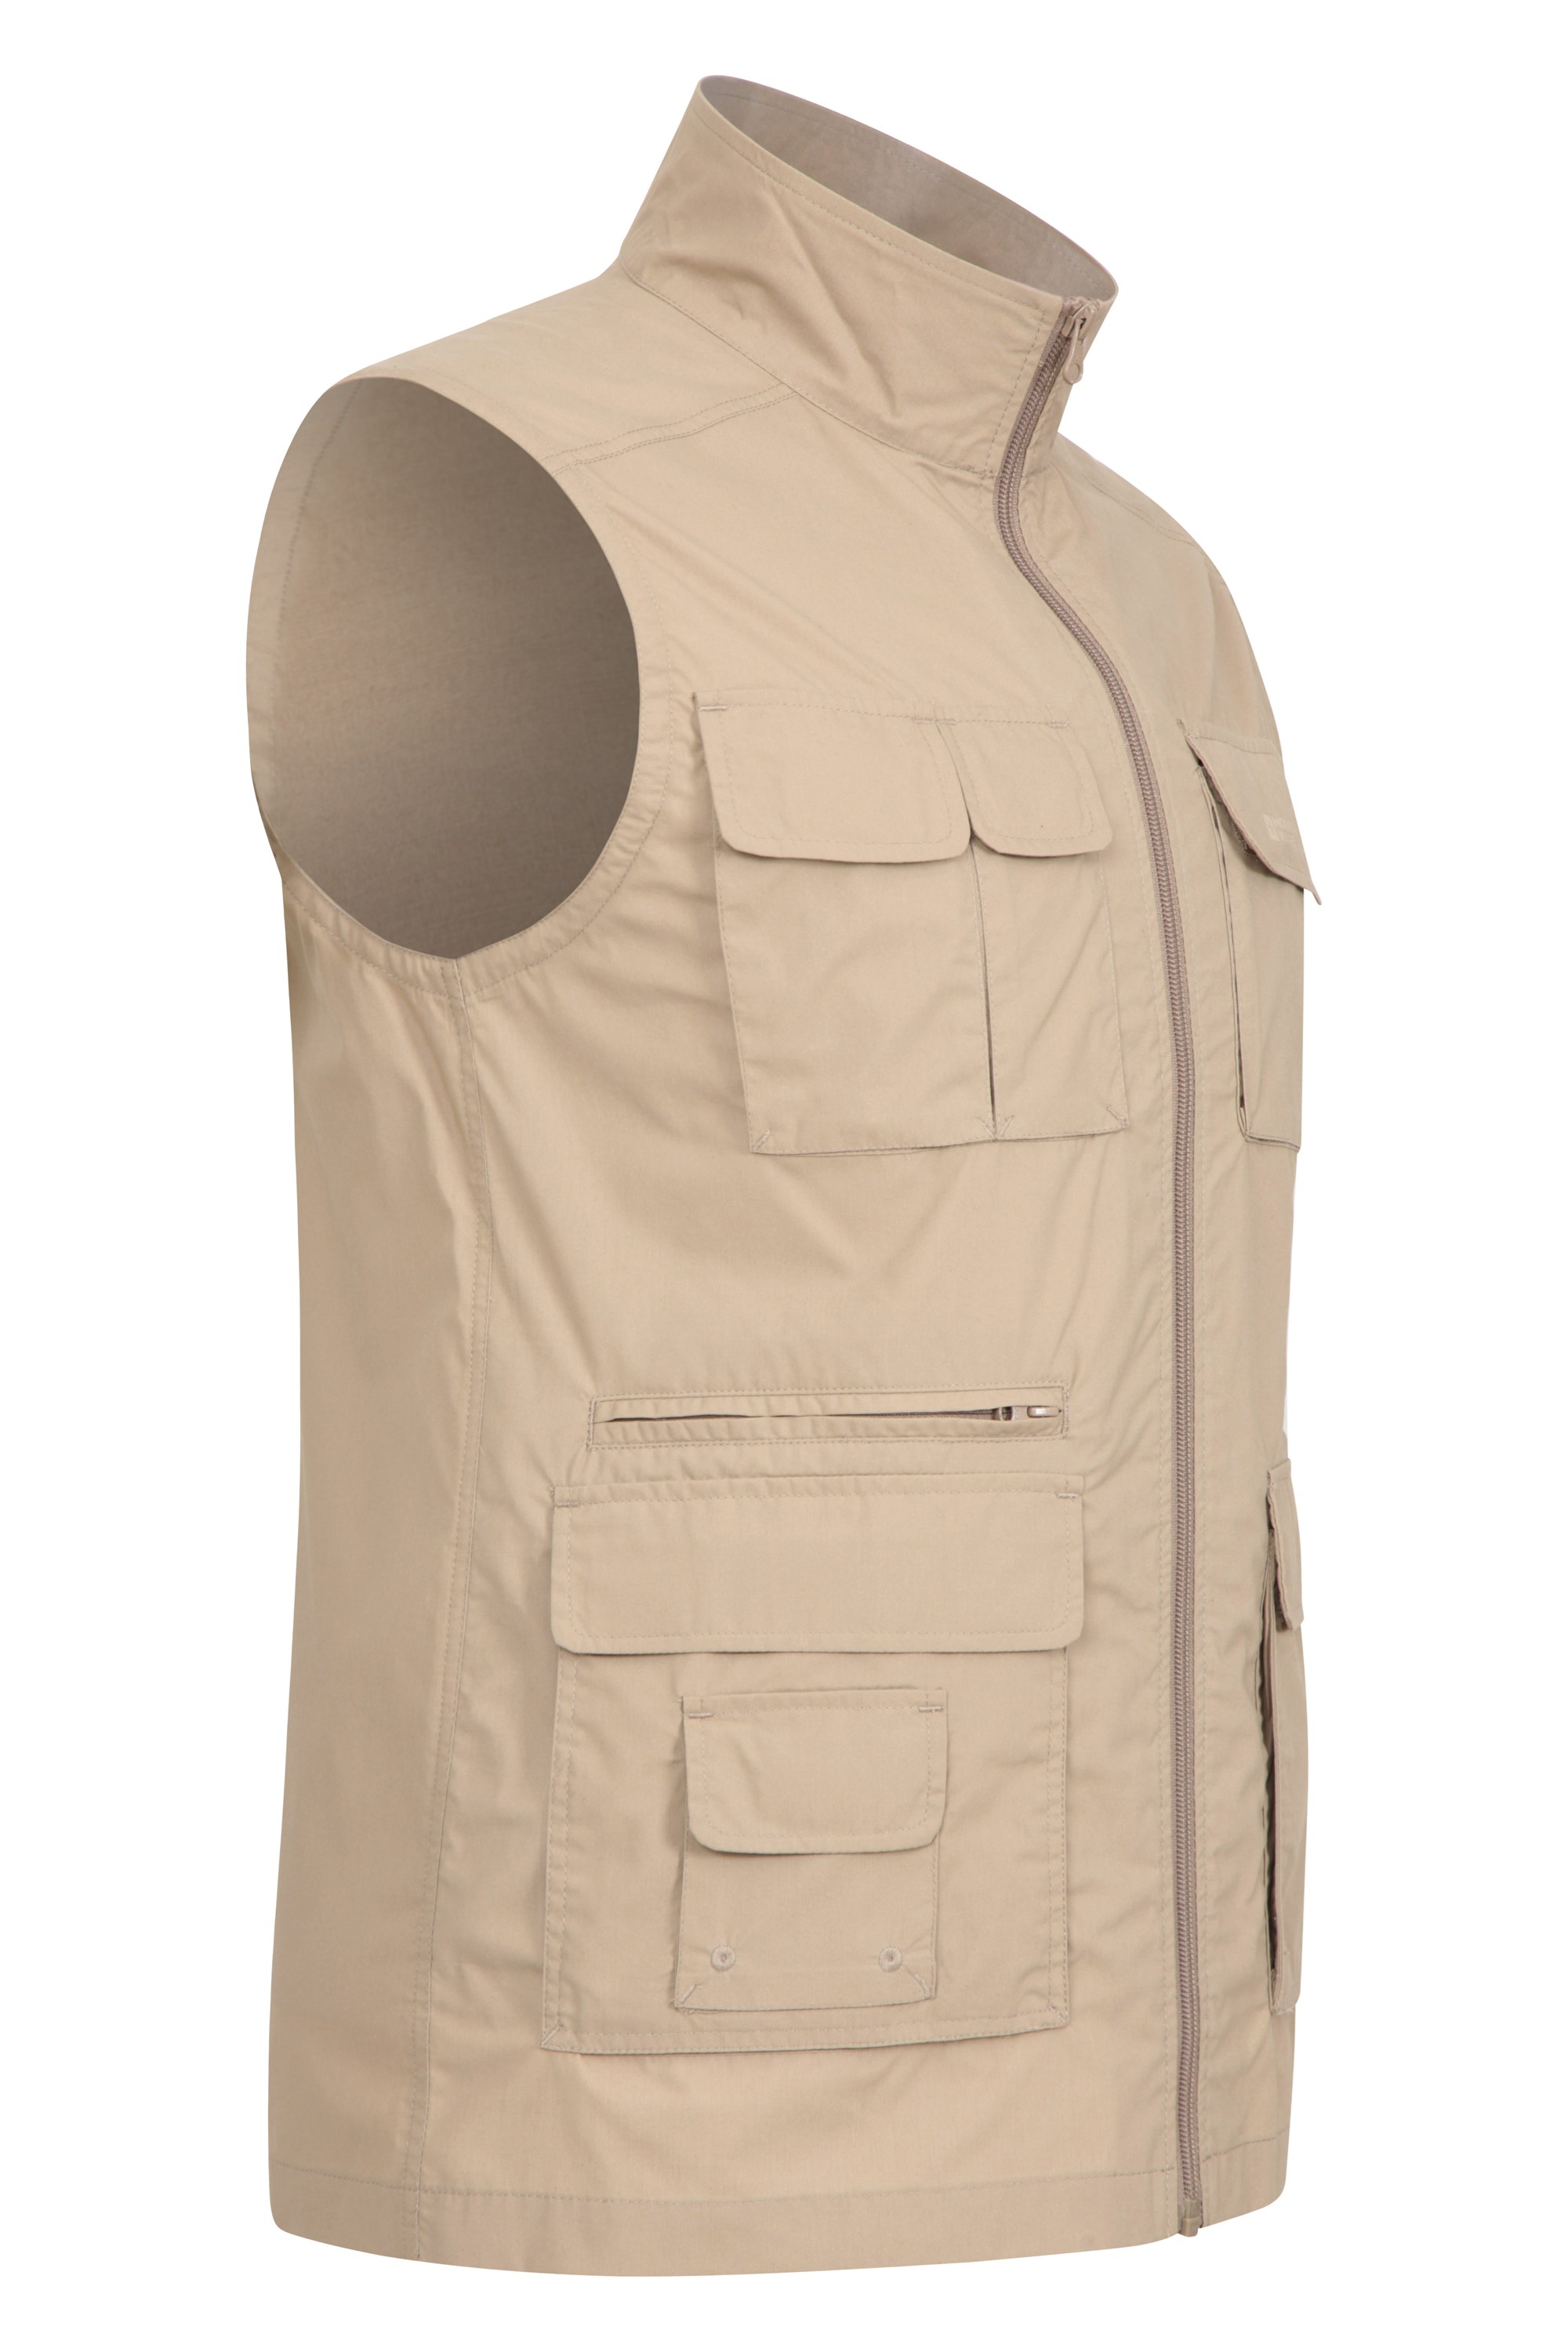 Mountain Warehouse Mens Trek II Gilet Male Warm Breathable Long Sleeved Puffer 